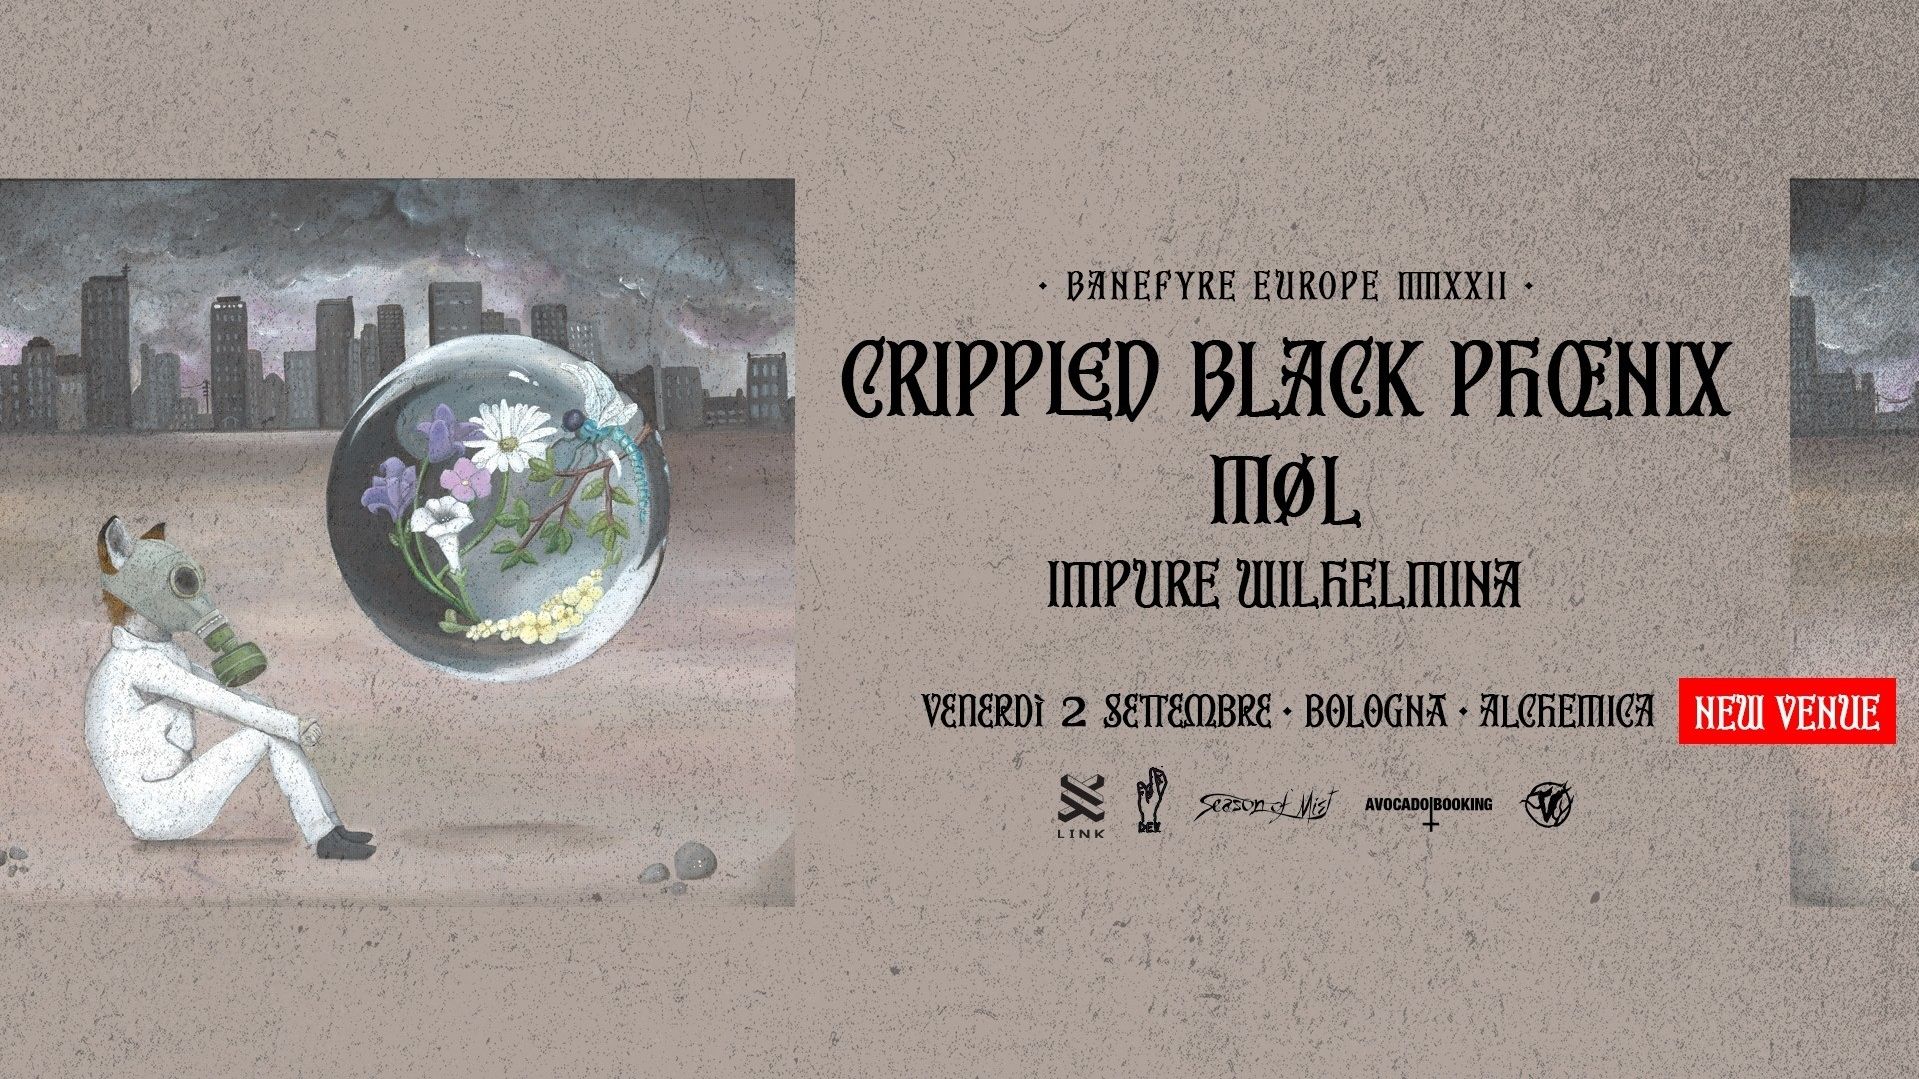 Crippled Black Phoenix (Unica data italiana) + MØL + Impure Wilhelmina